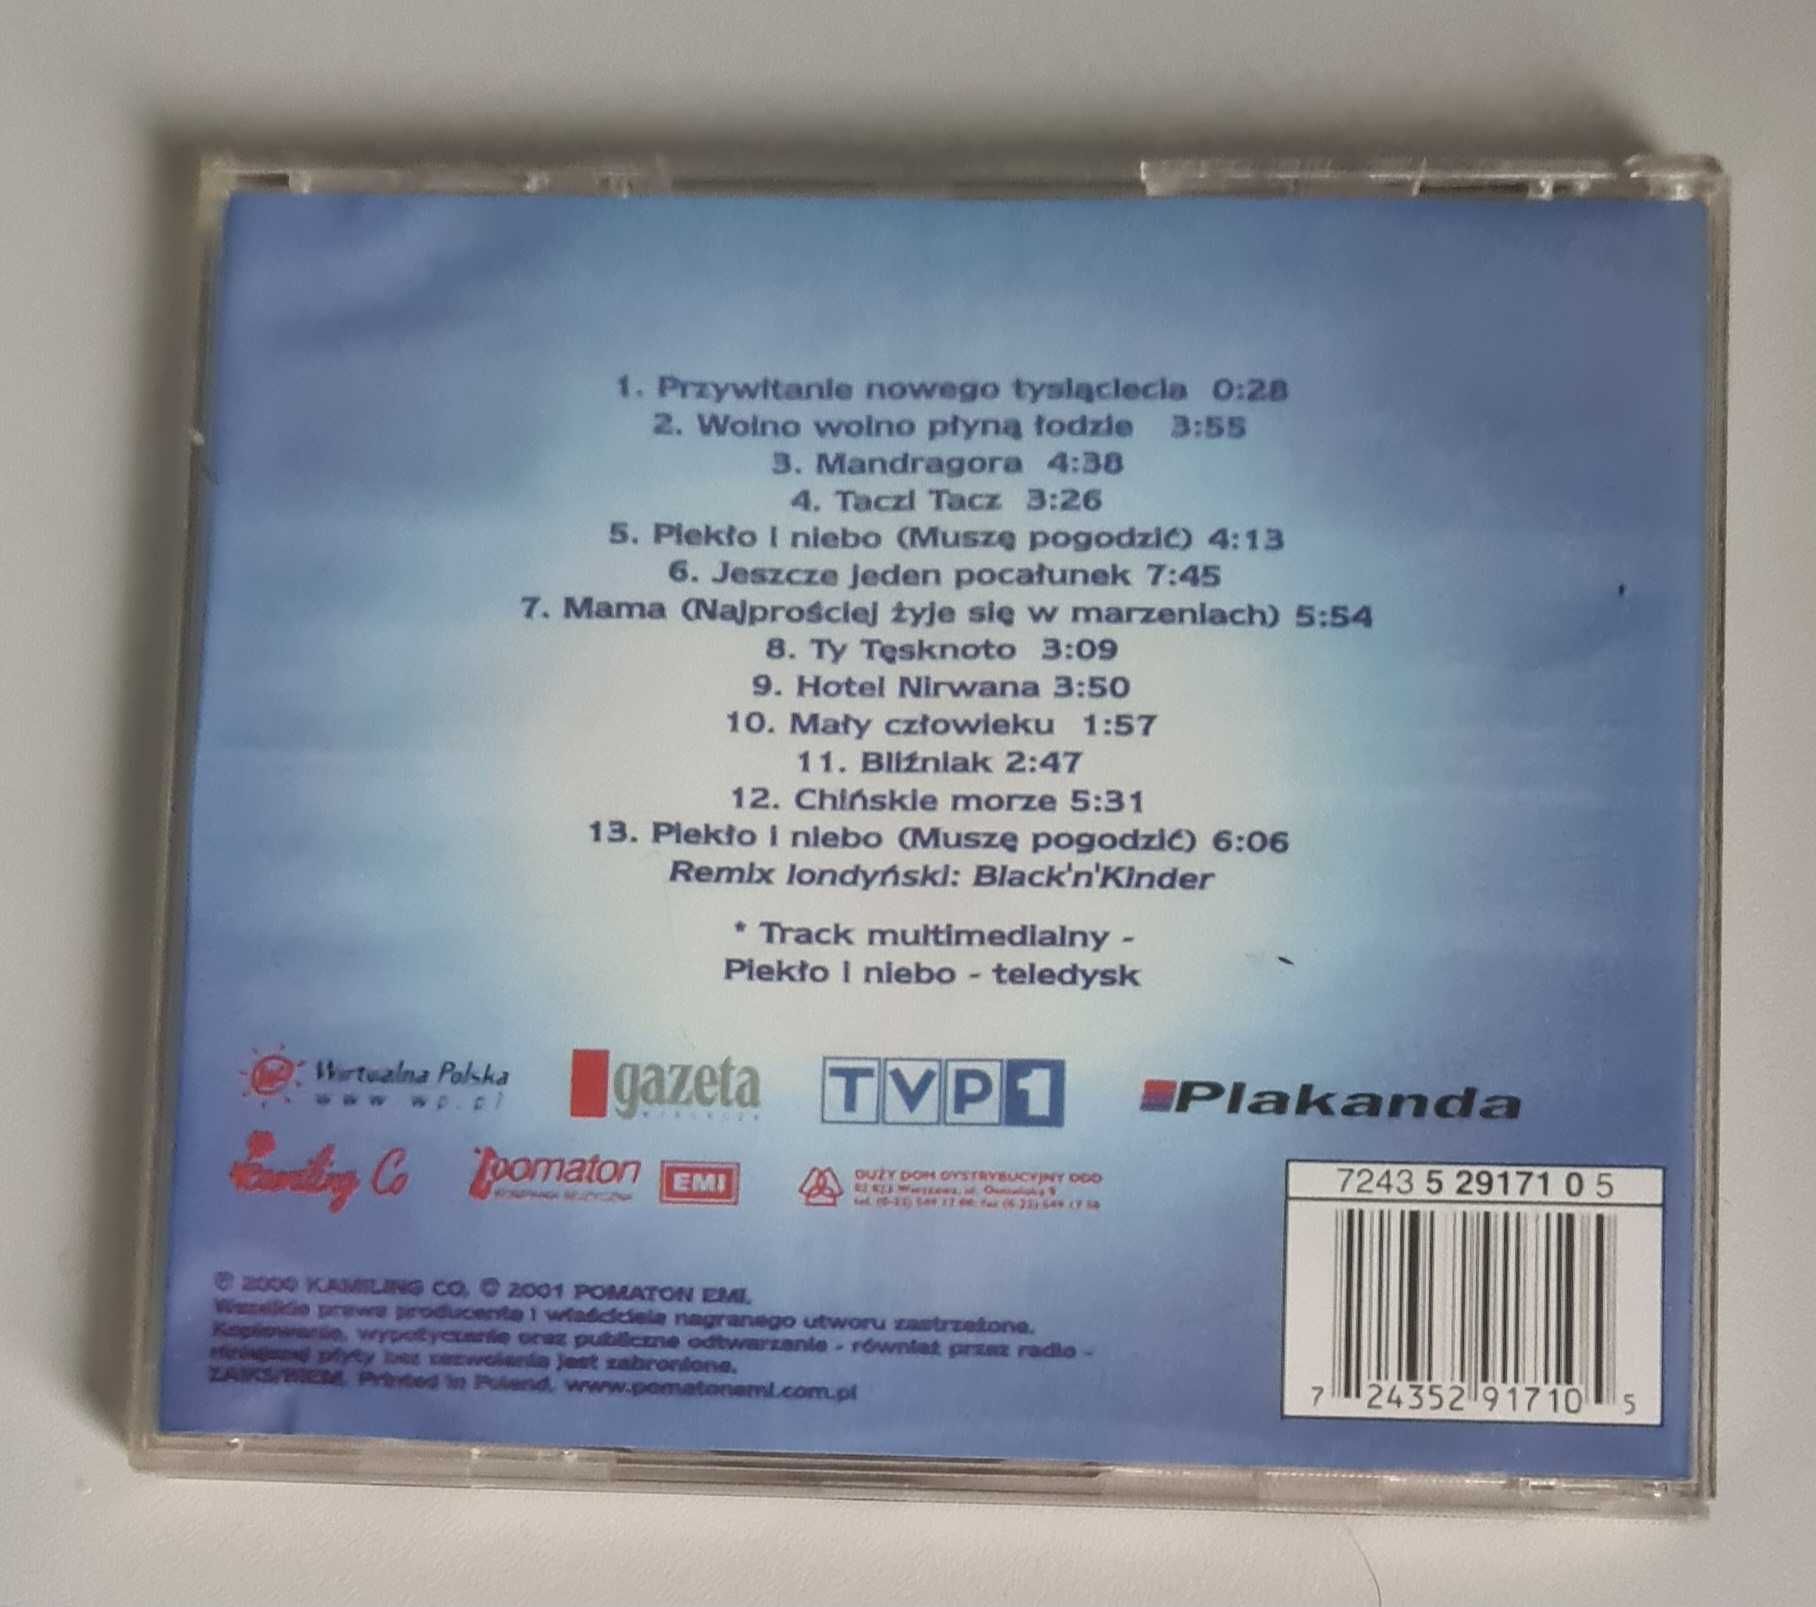 Maanam Hotel Nirwana płyta CD